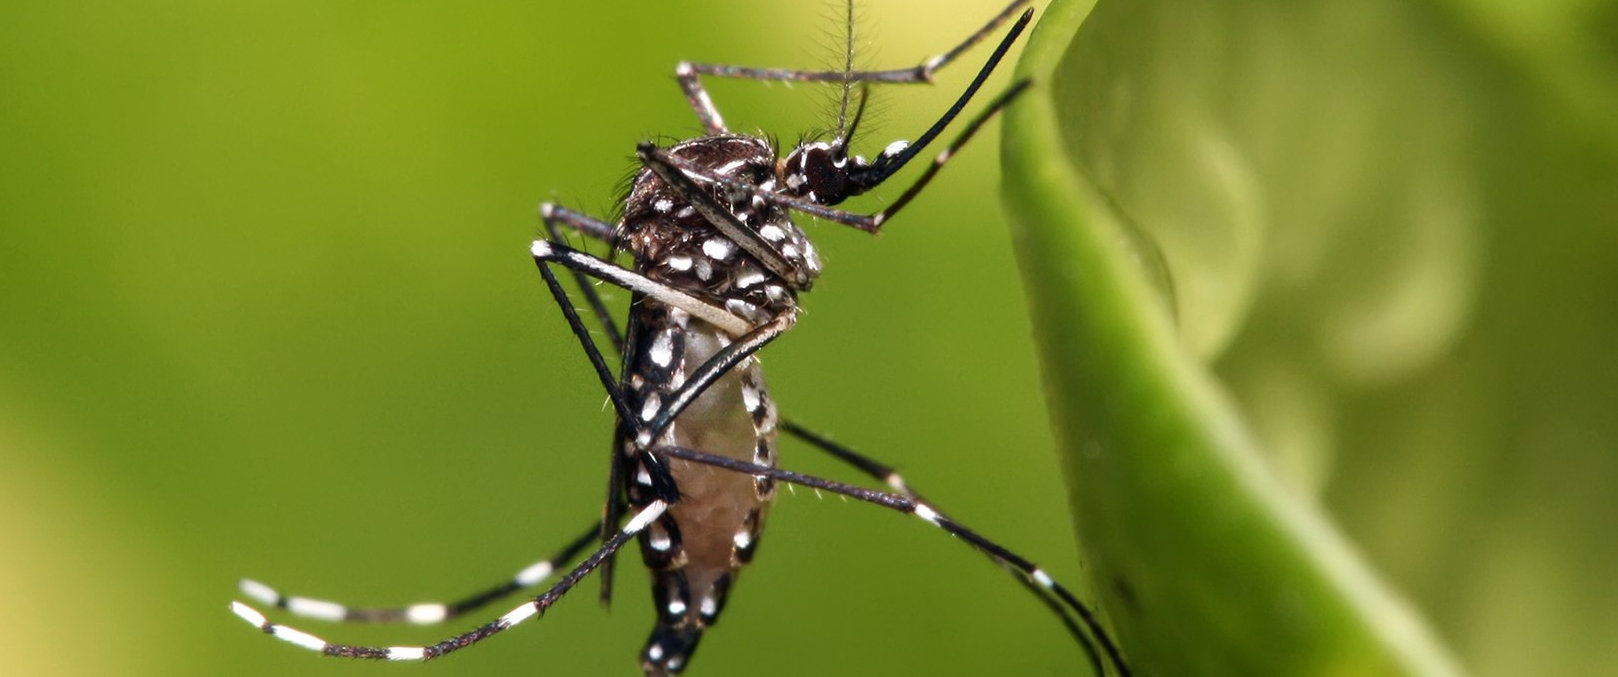 Aedes aegypti (Foto: Muhammad Mahdi Karim, Wikicommons 2020)